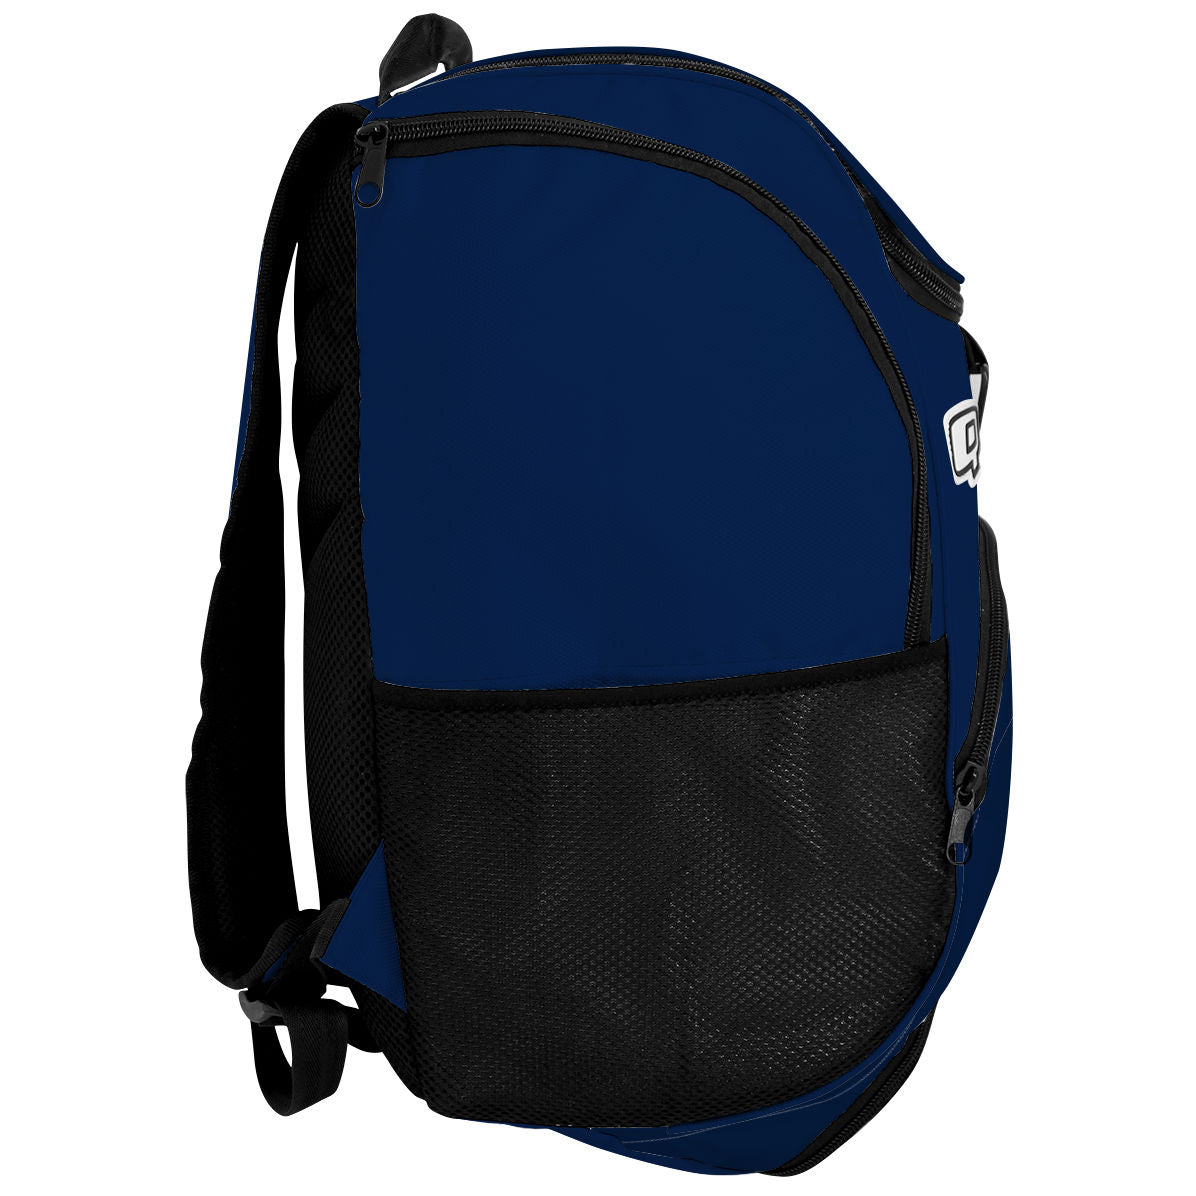 La Jolla Solid - Backpack